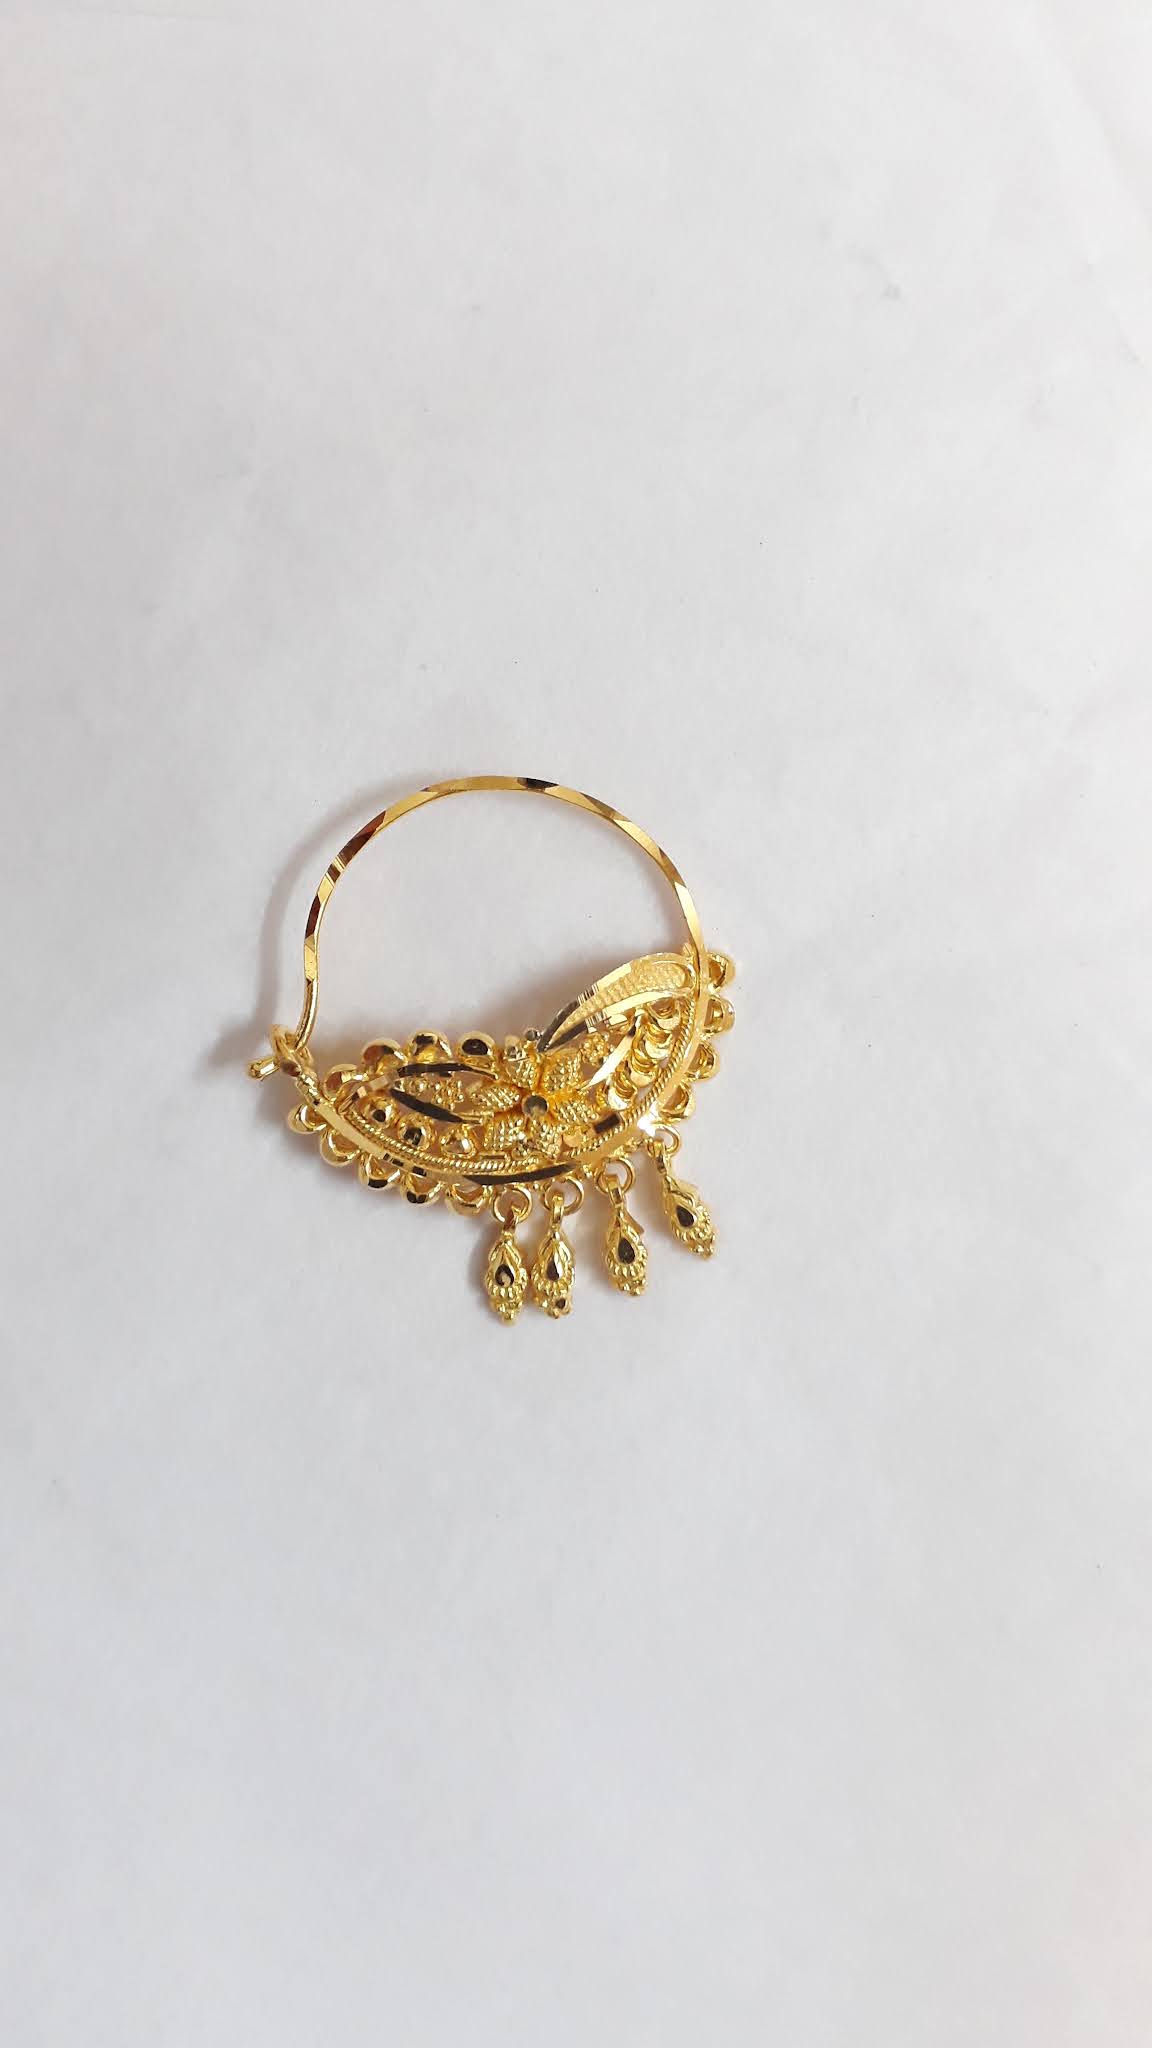 Golld Nathia Designs, Gold noth design, Gold nose ring, gold bridal nose pin, nose ring, nose stud, gold nose ring, nathia designs, Gold Nathia designs, Bridal Nath nathia designs